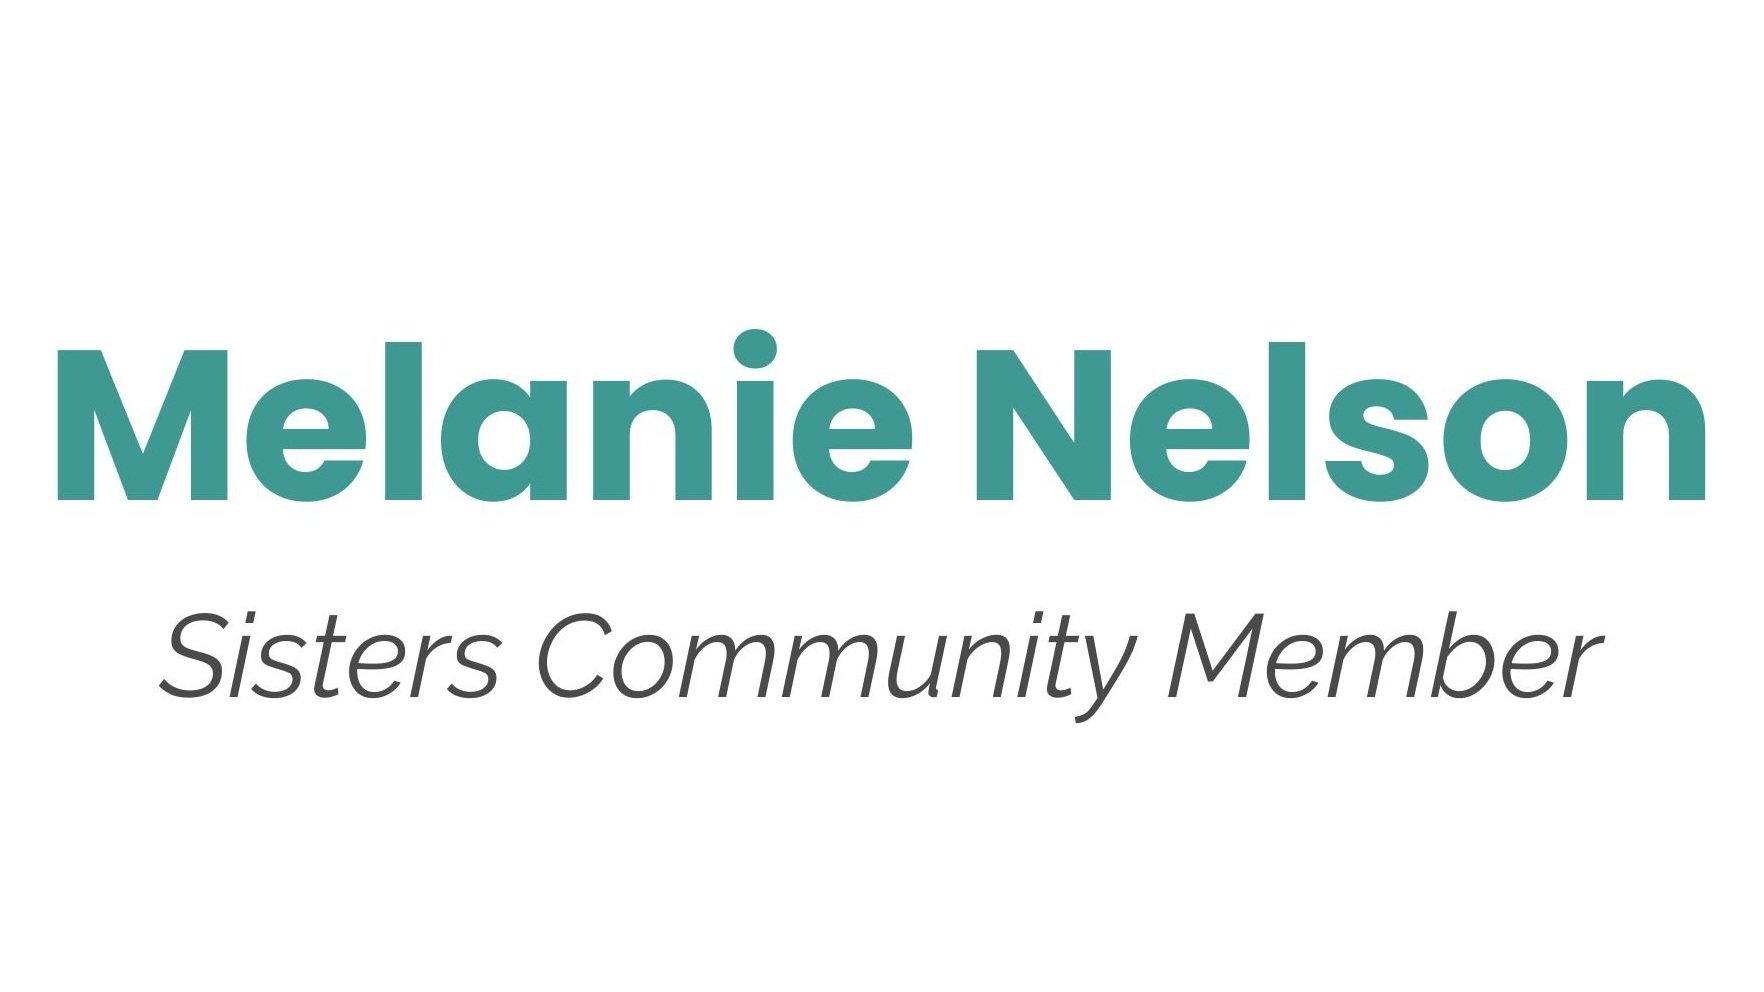 Melanie+Nelson+Sisters+Community+Member.jpg